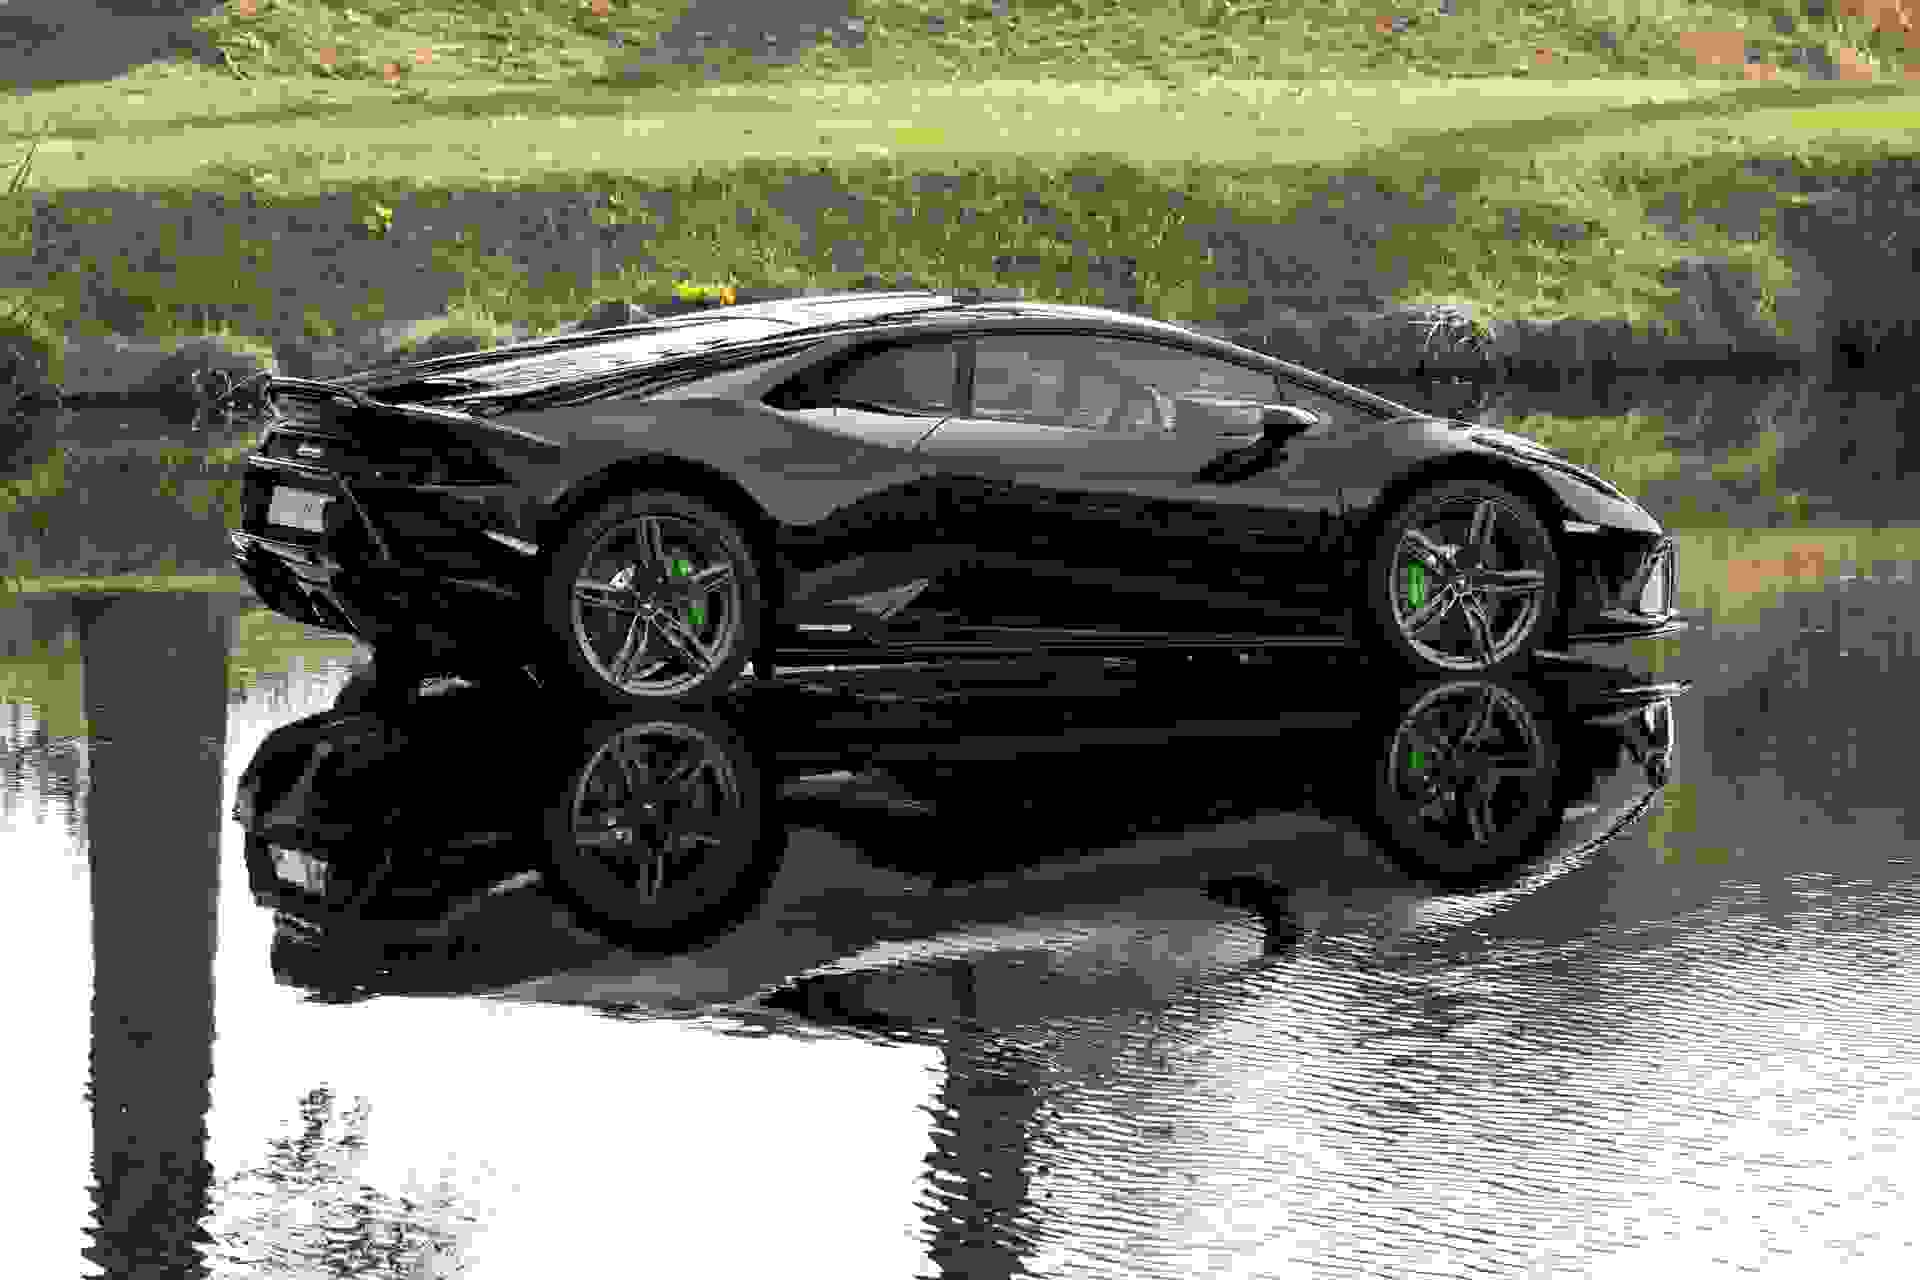 Lamborghini Huracan Photo b1d38395-c55b-4ed3-b0db-b397fdd3c52e.jpg